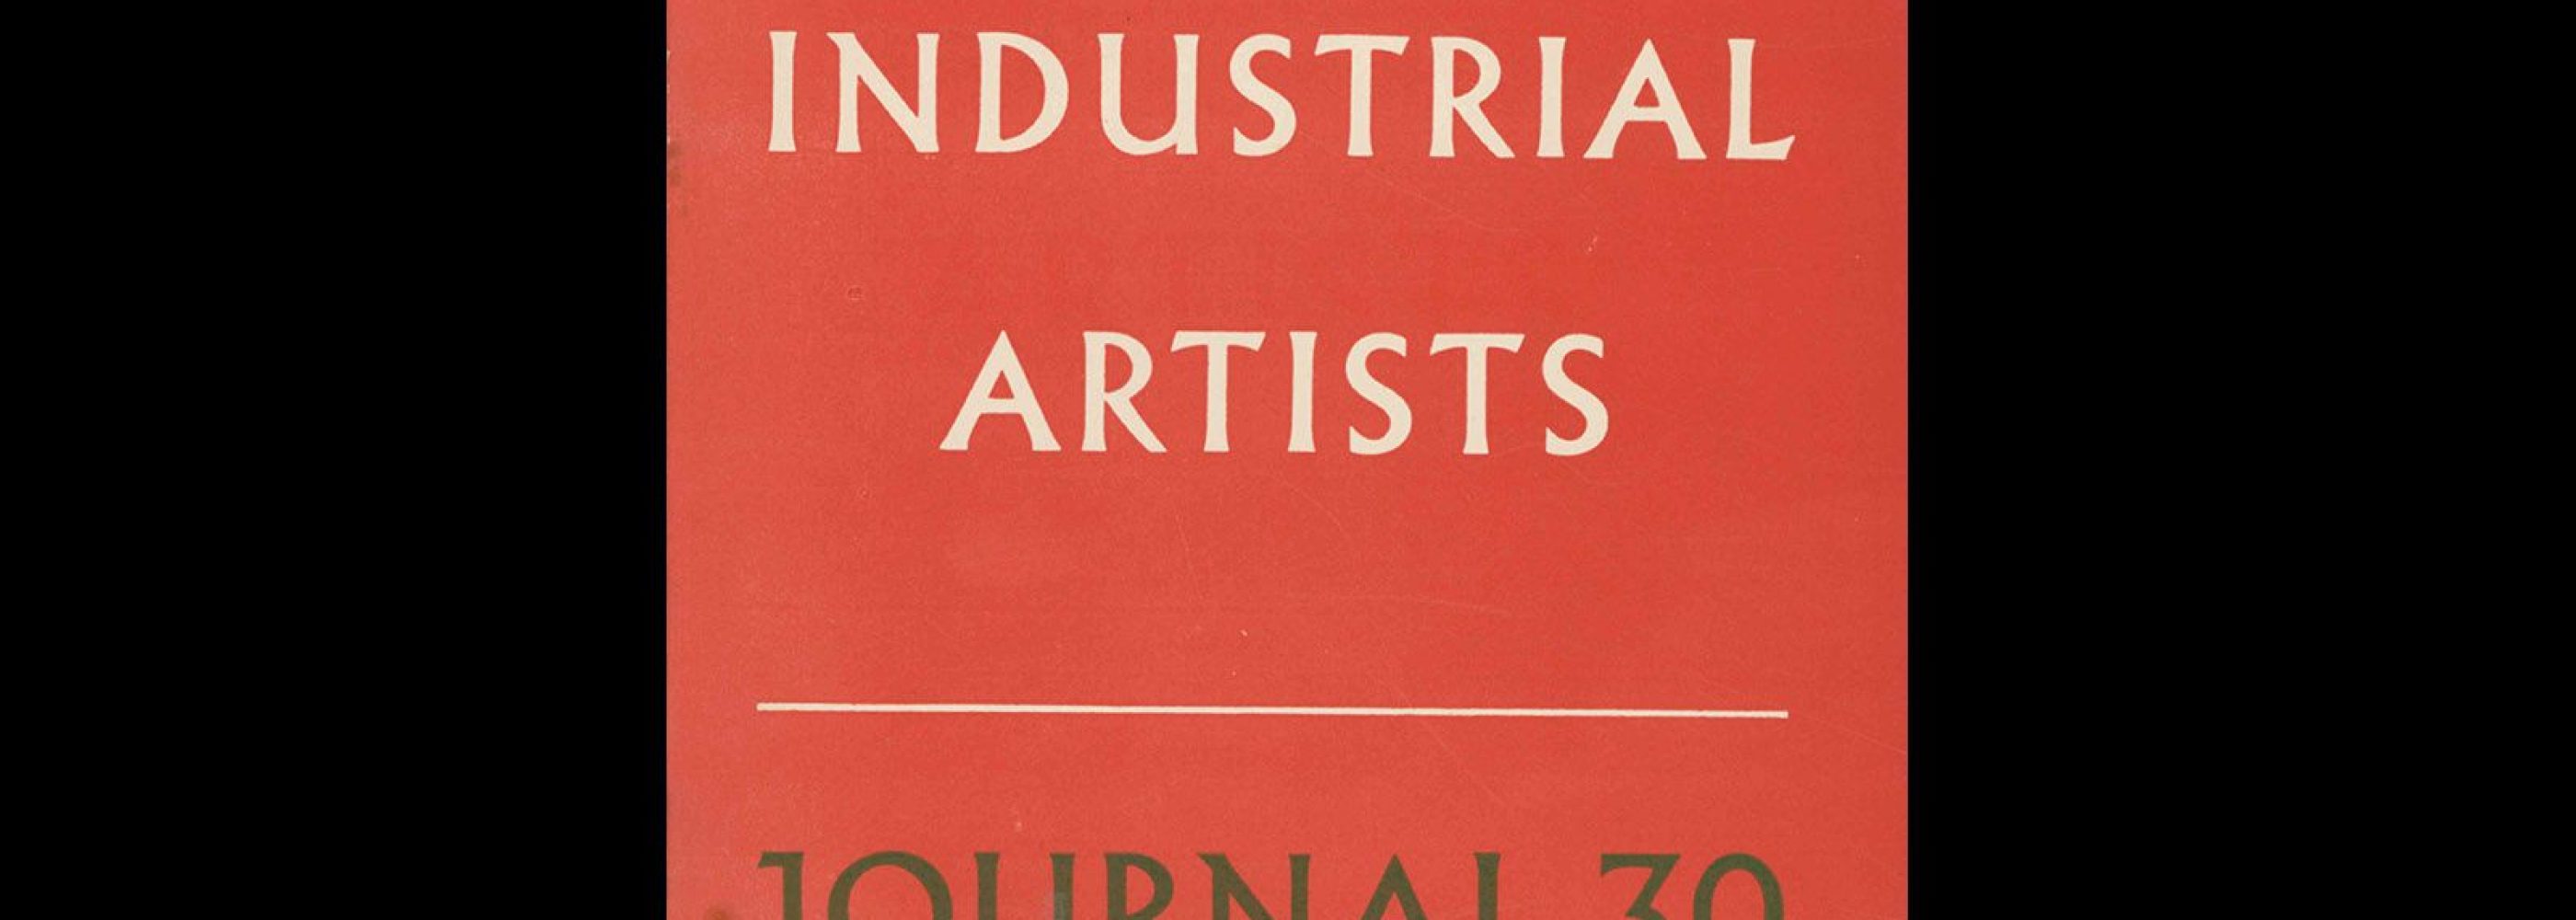 Society of Industrial Artists, 30, December 1952